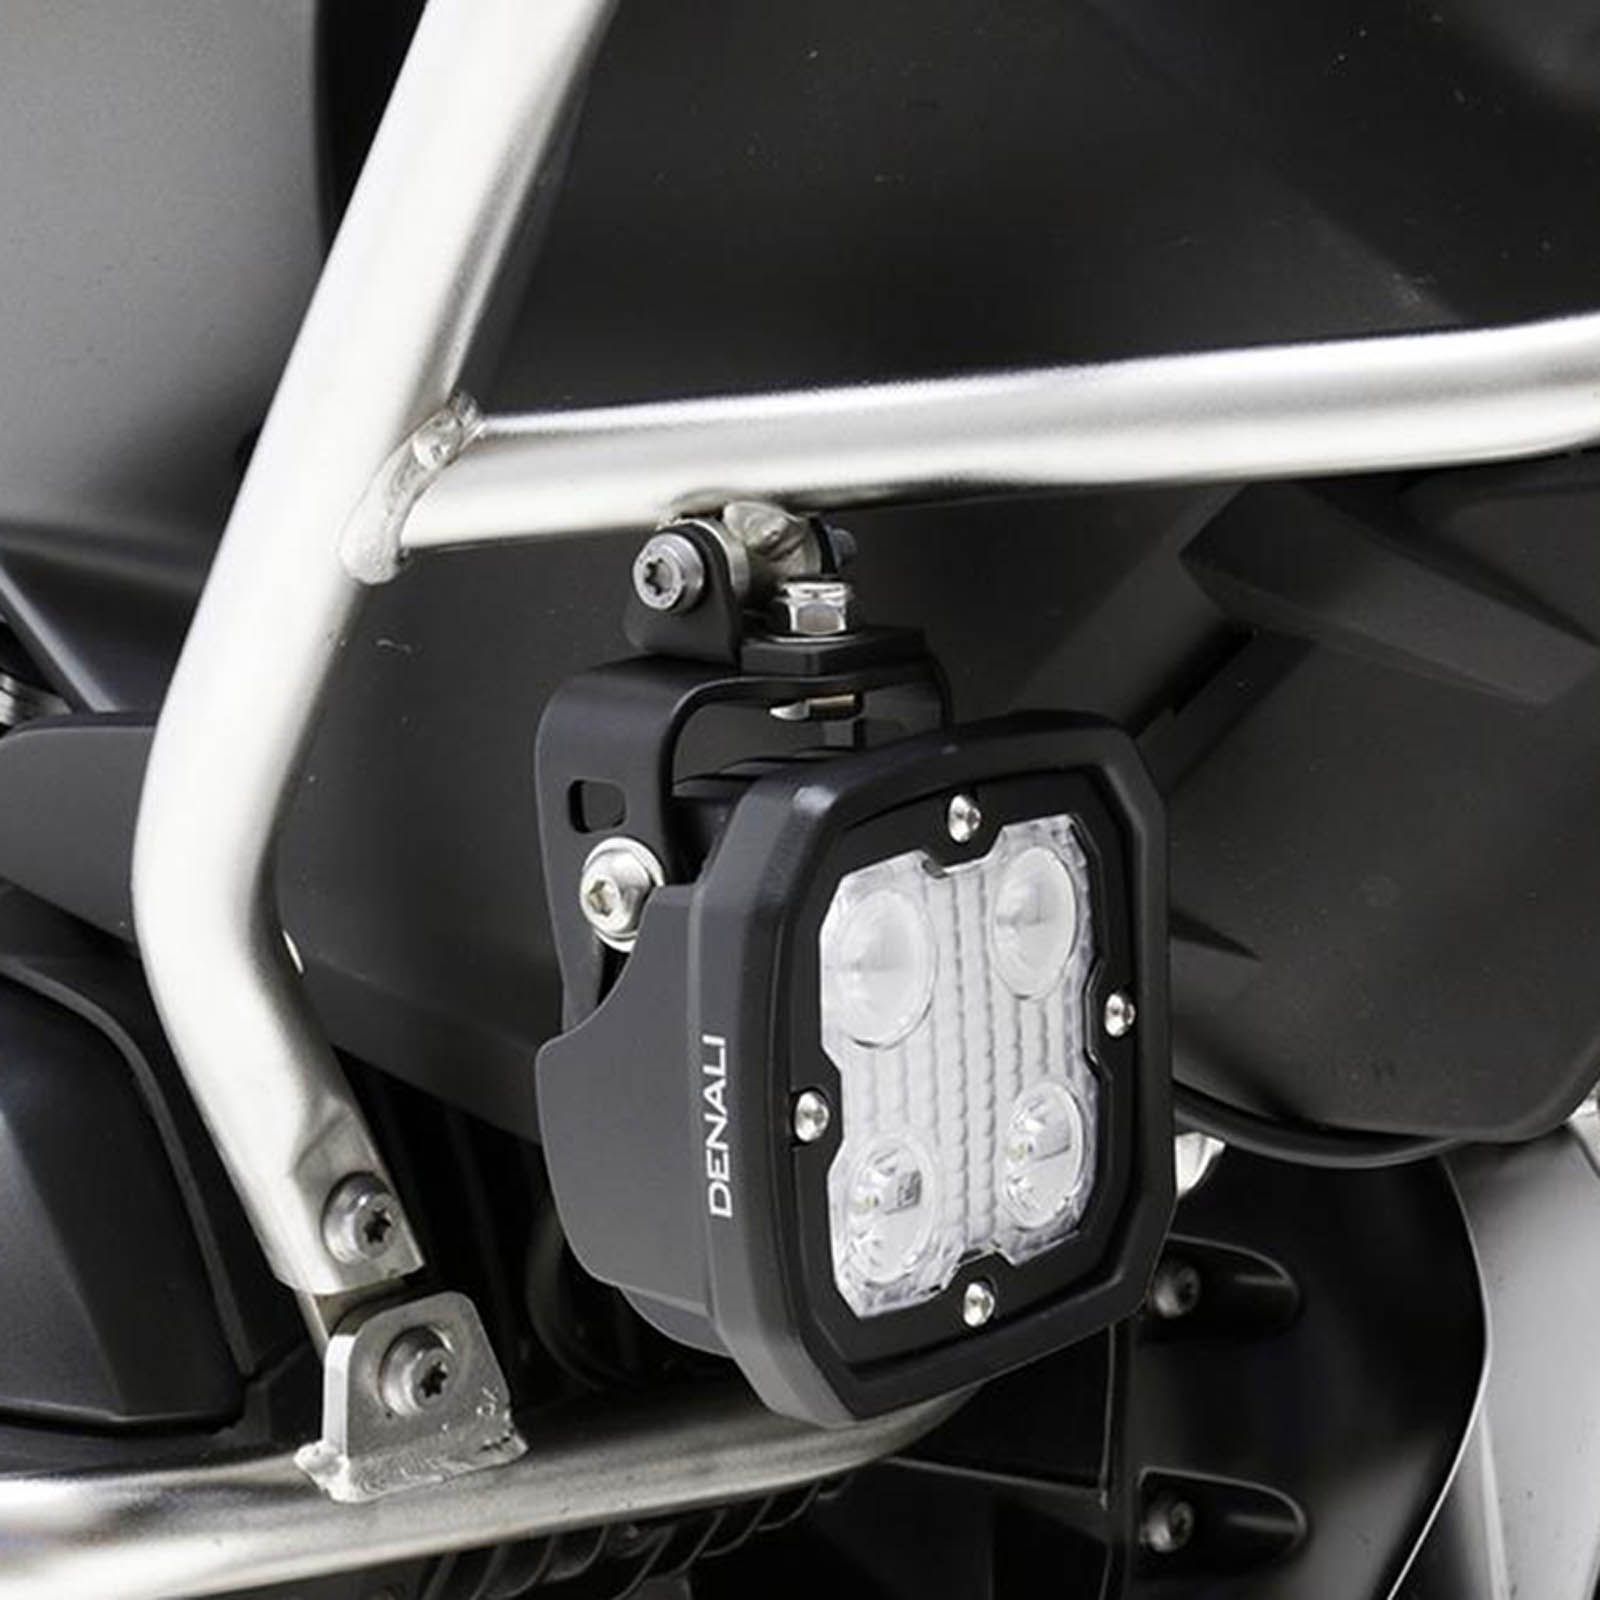 New DENALI Crashbar Light Mount Adapter - ASSTD For BMW Models #DELAH0710900